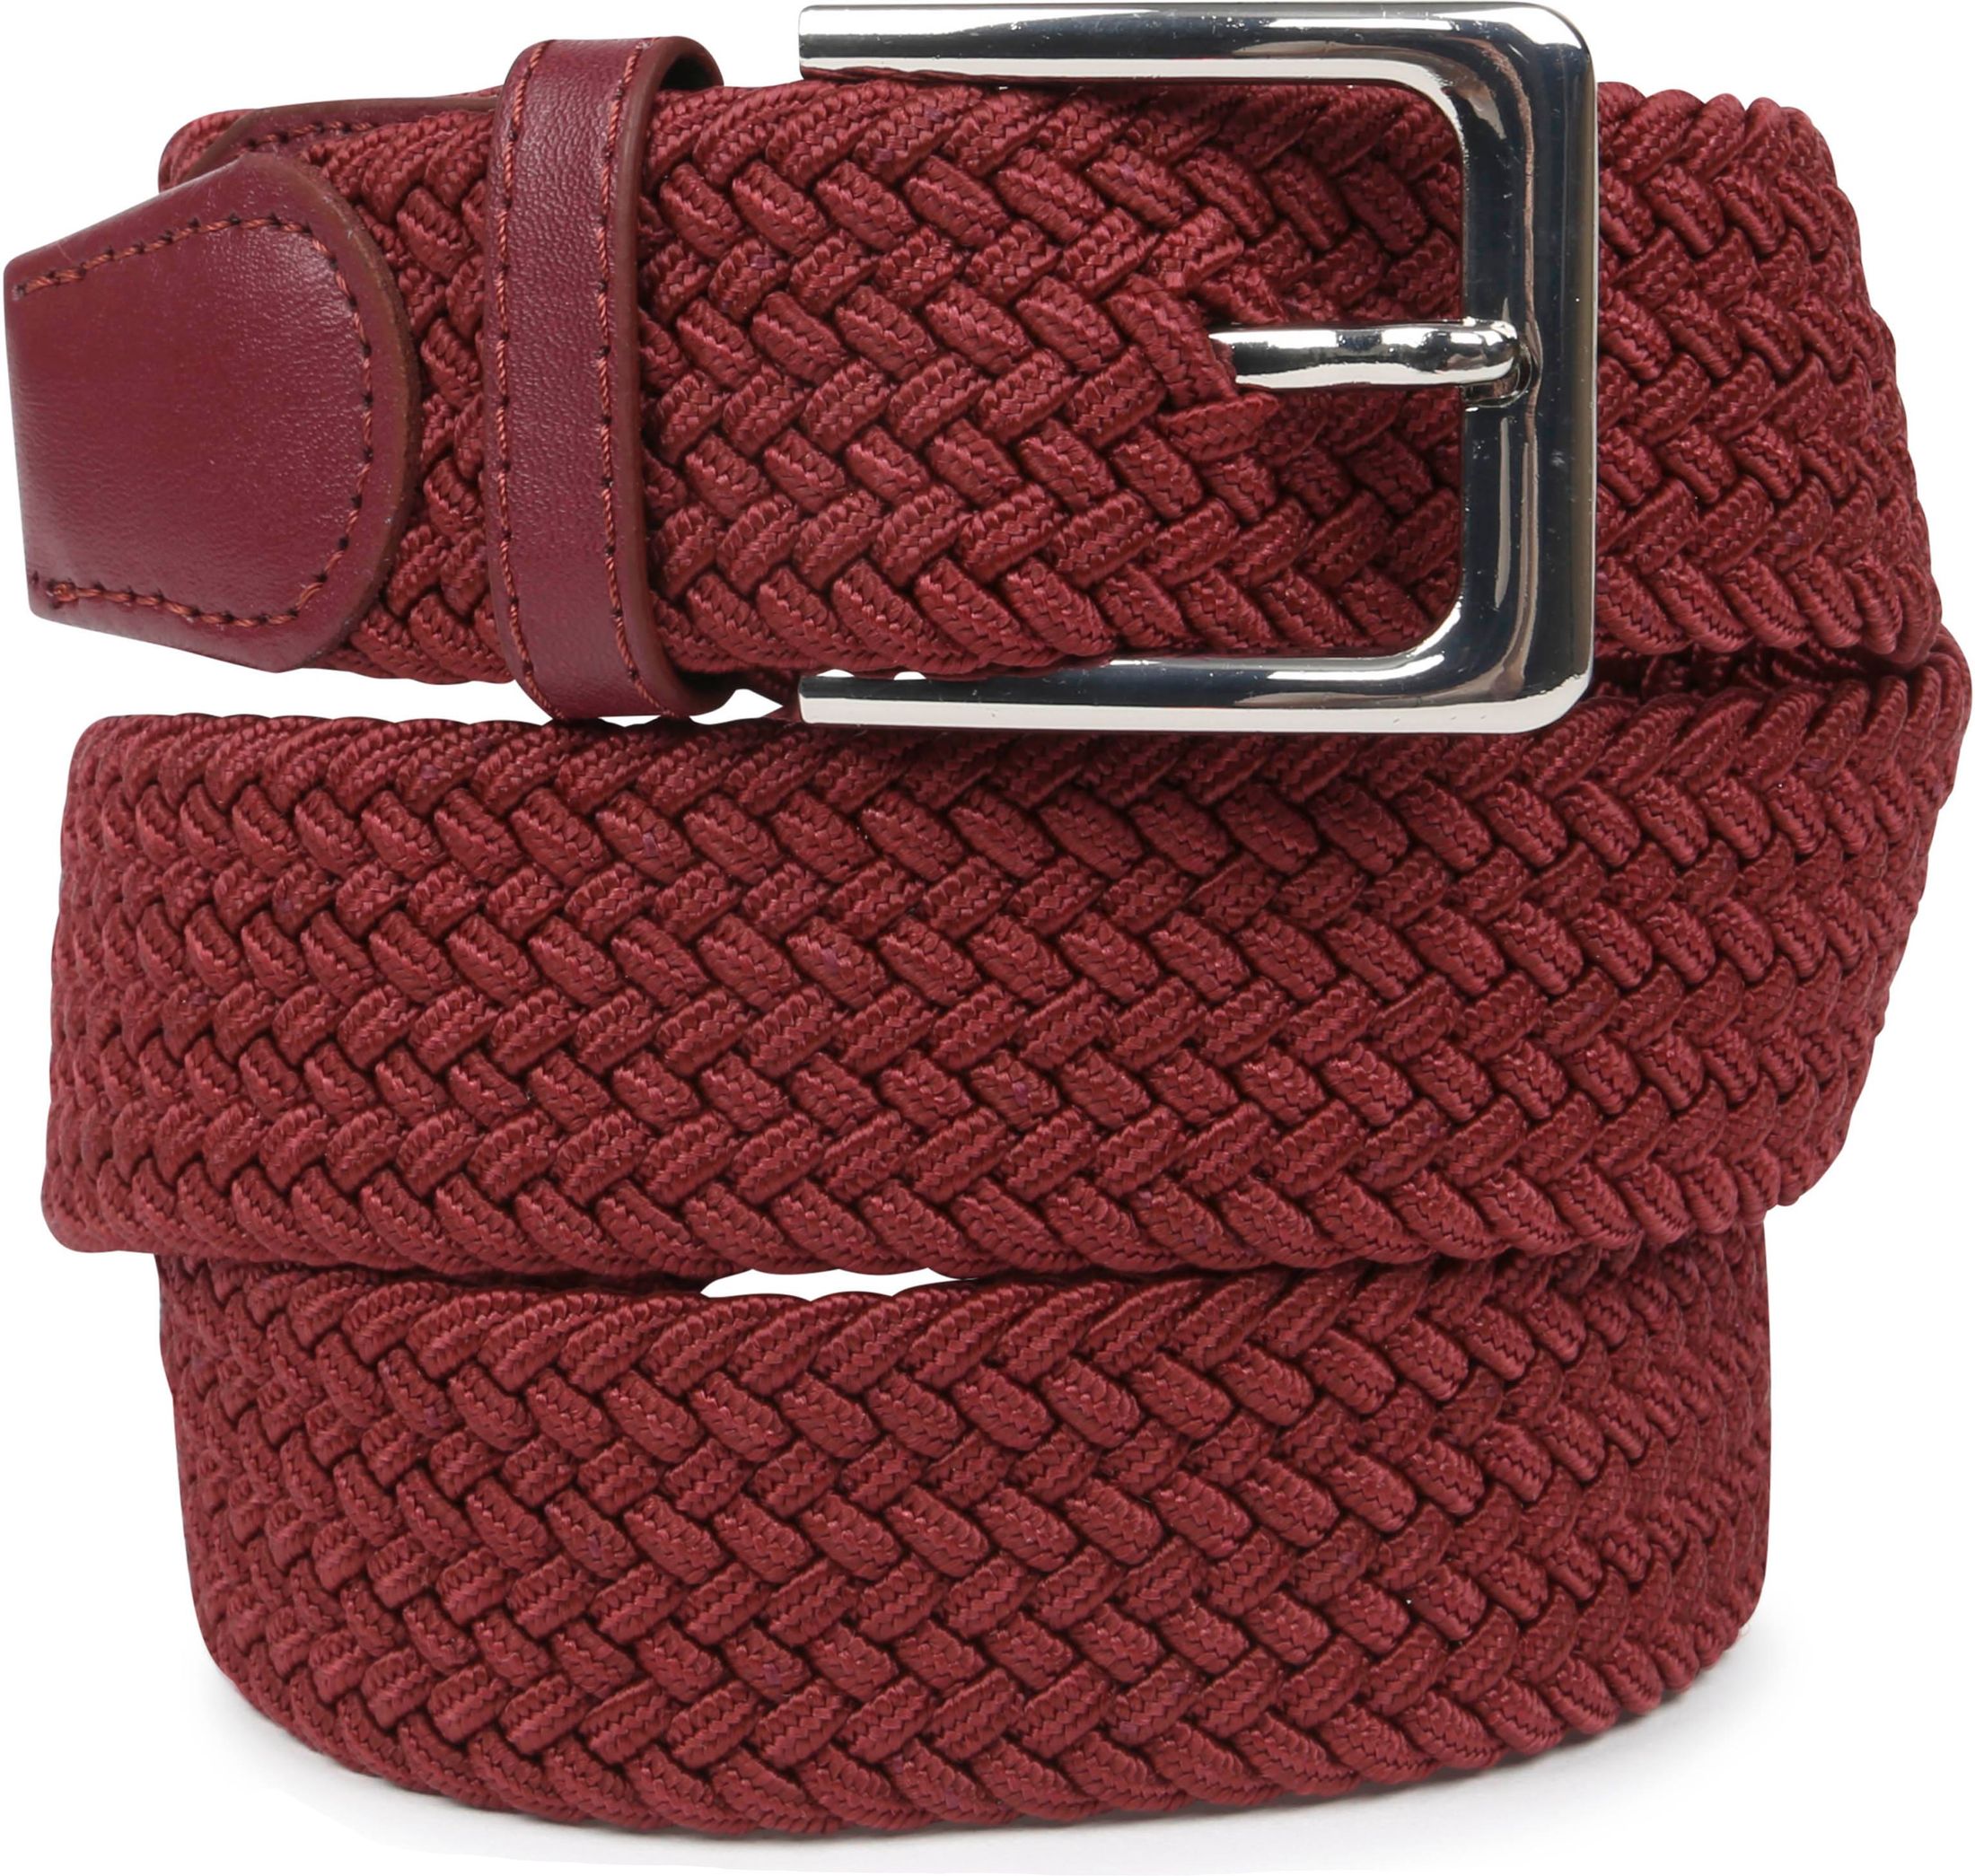 Suitable Braided Belt Bordeaux Red Burgundy size 33.5